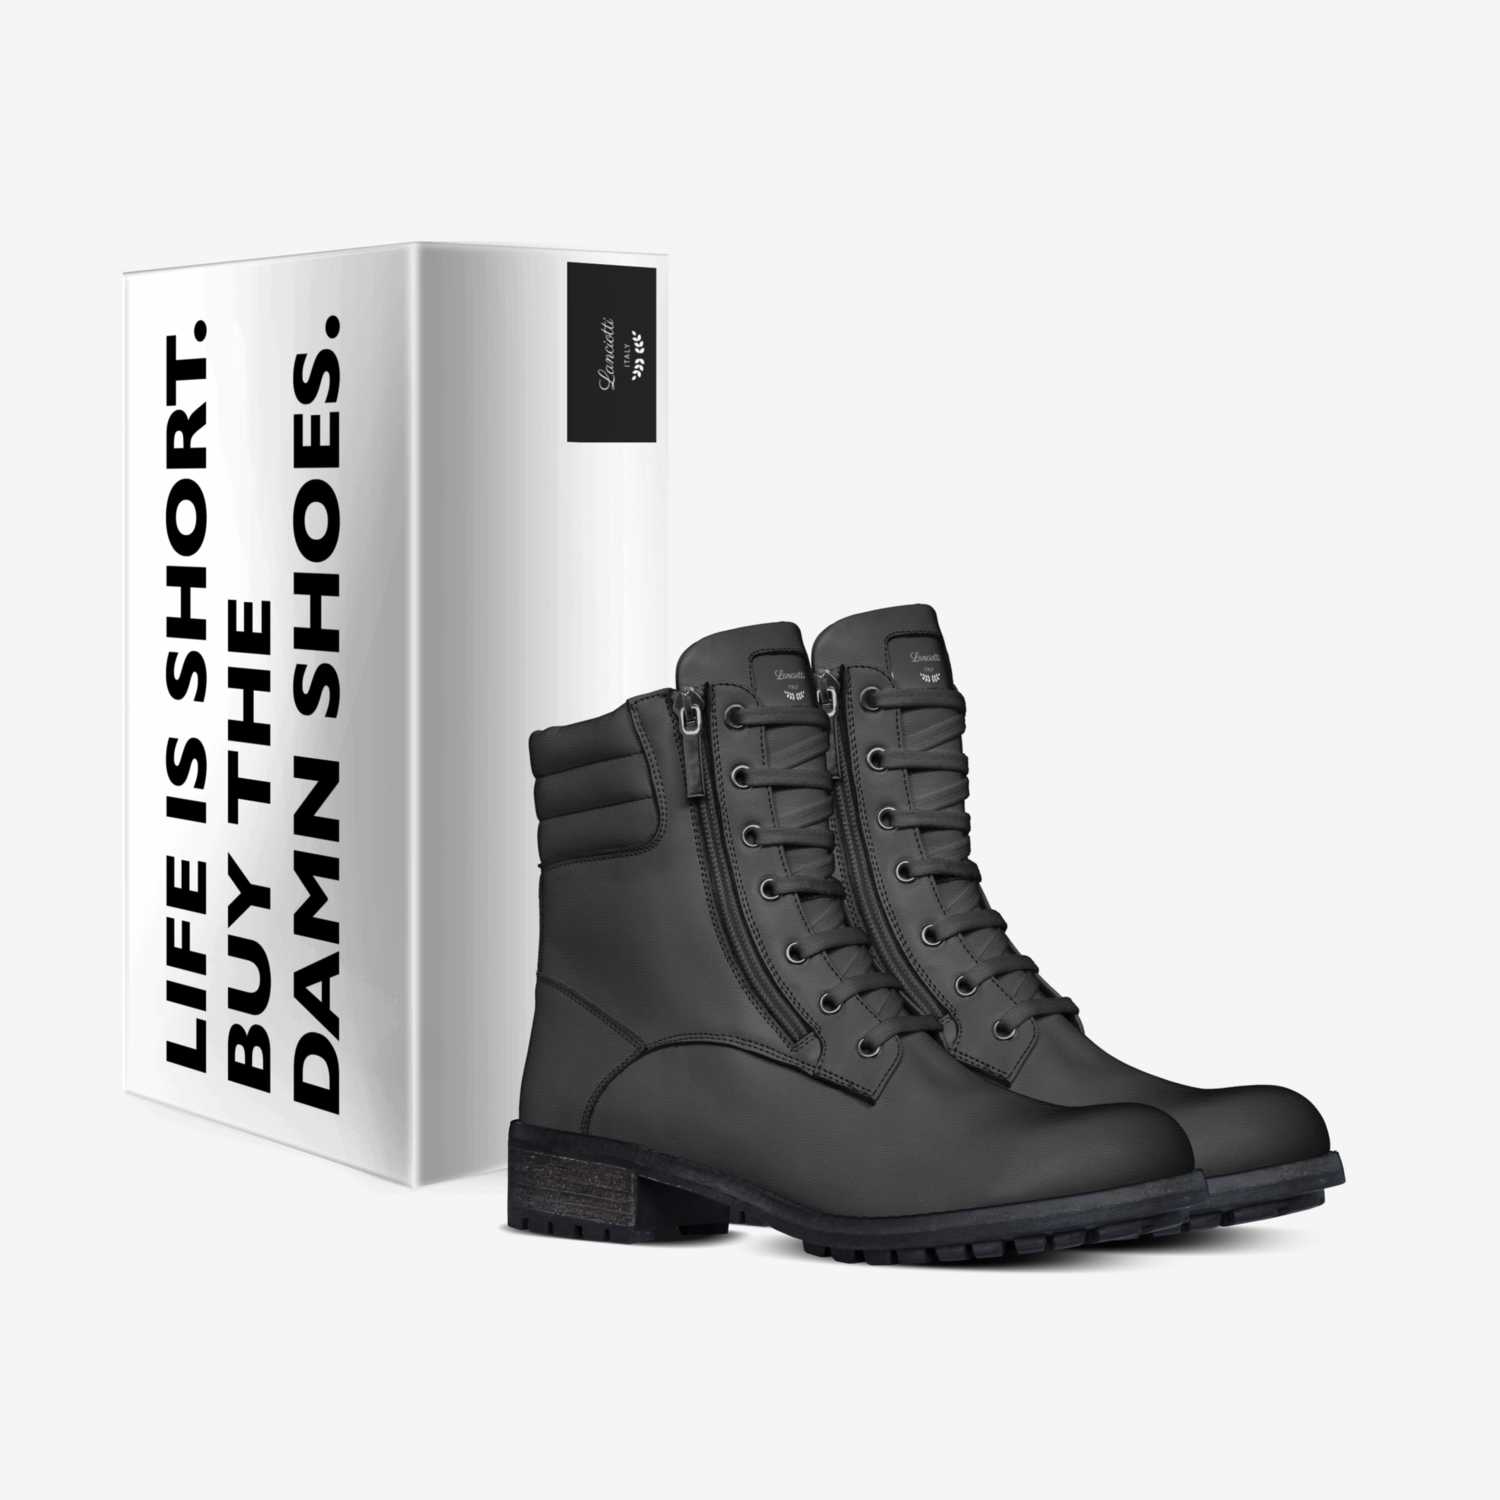 Lanciotti custom made in Italy shoes by Sobrino Lanciotti | Box view